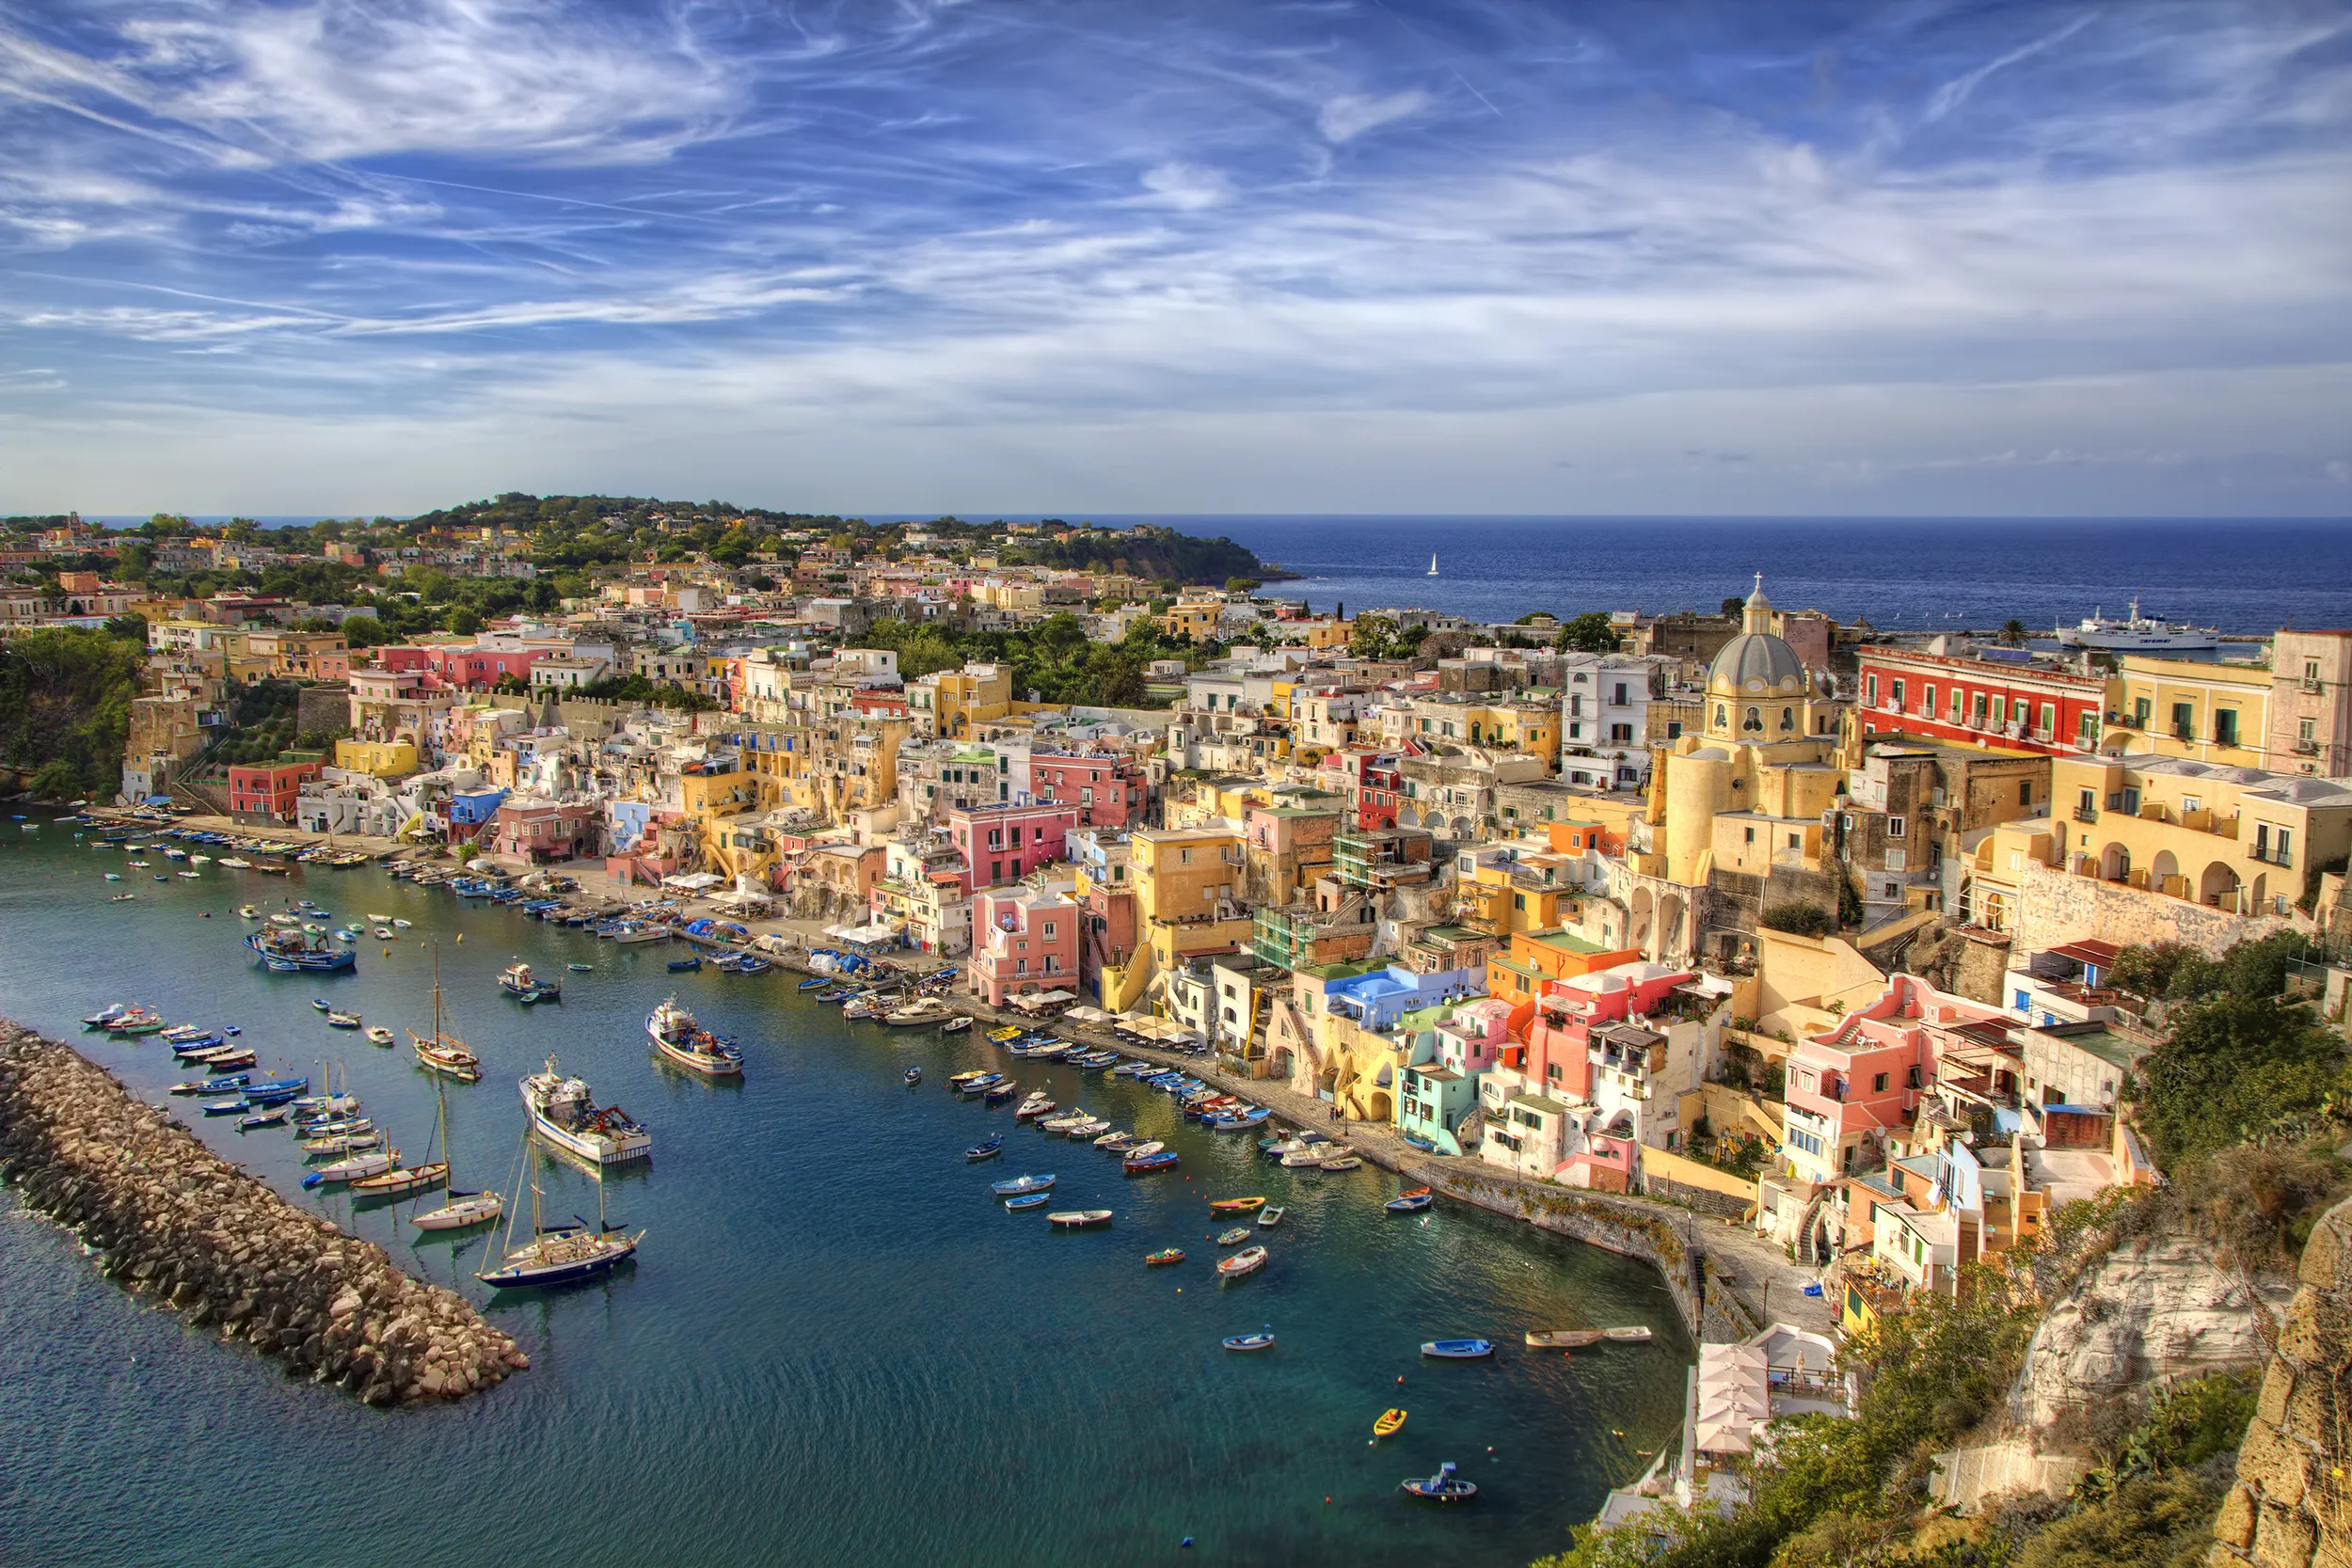 Harbor and ciry of Corricella, Island of Procida, Bay of Naples, Italy